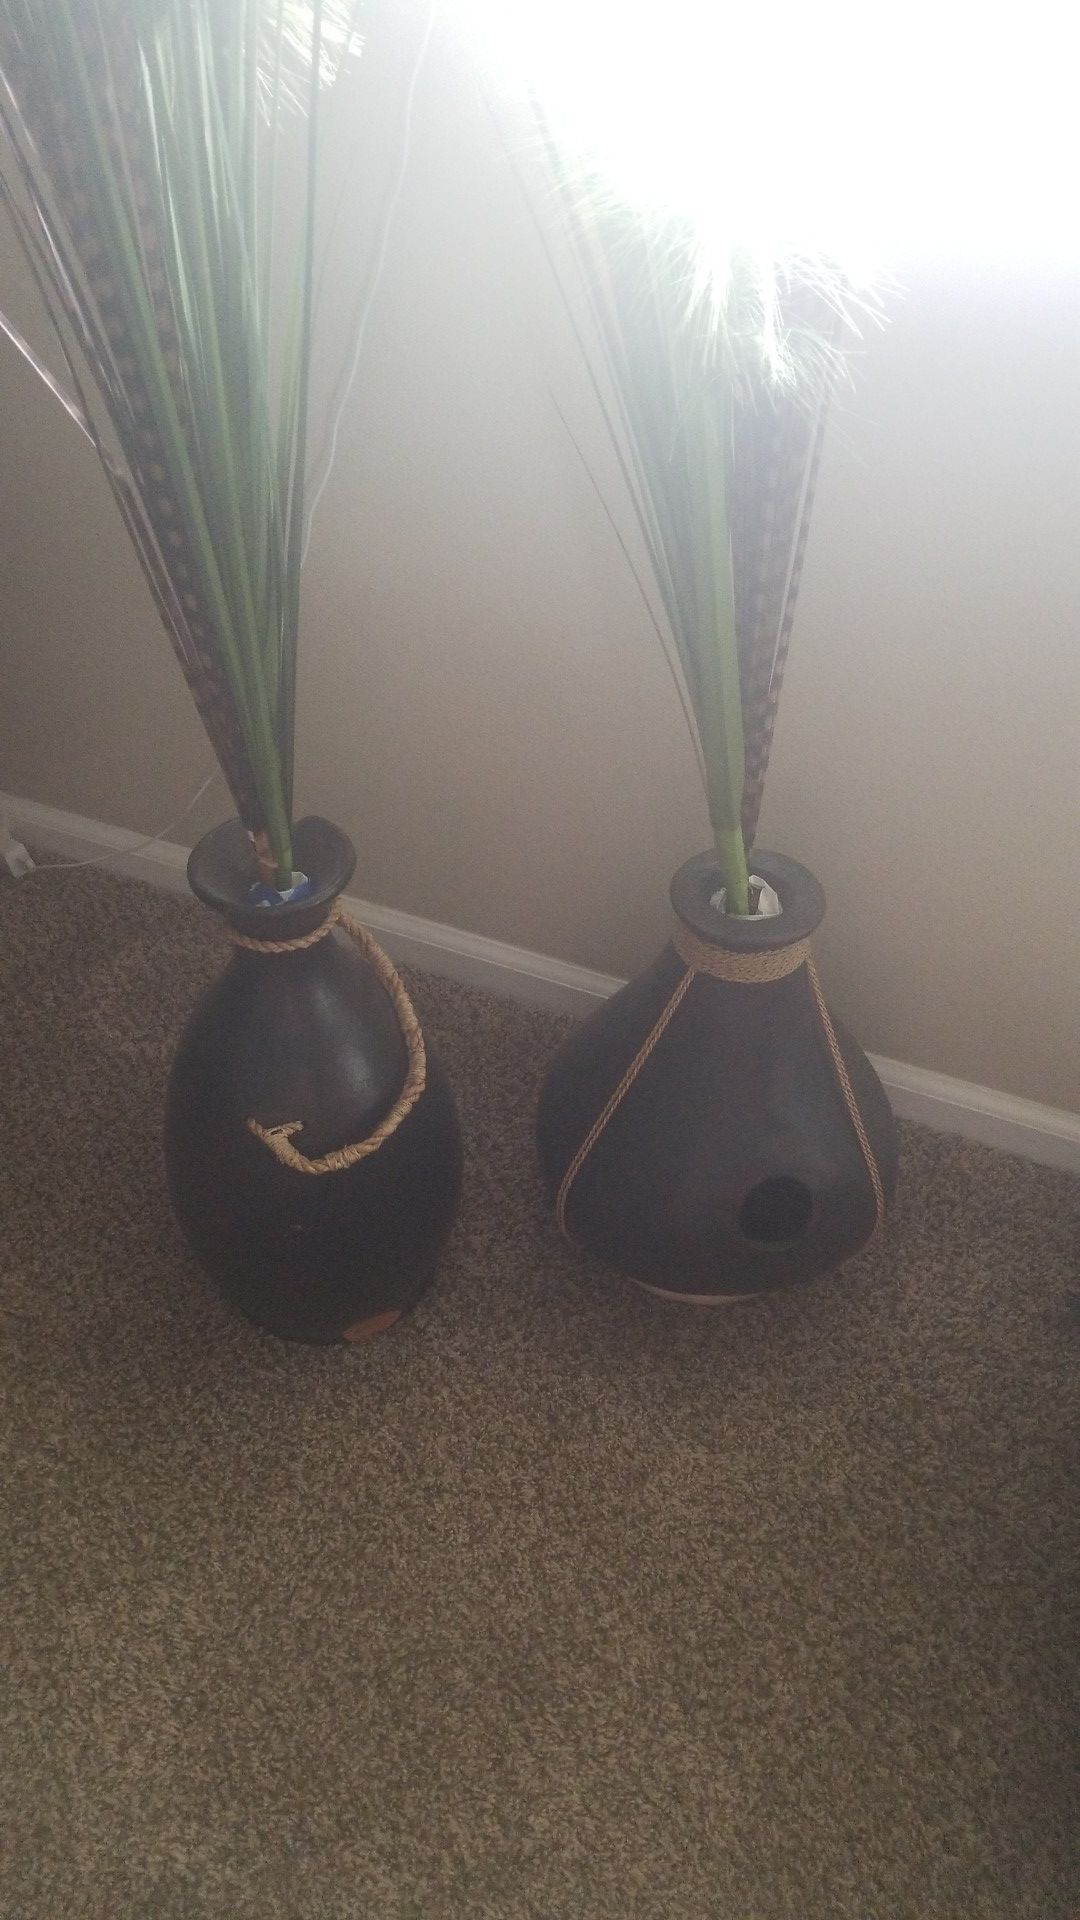 Decrotive jugs with fake plants